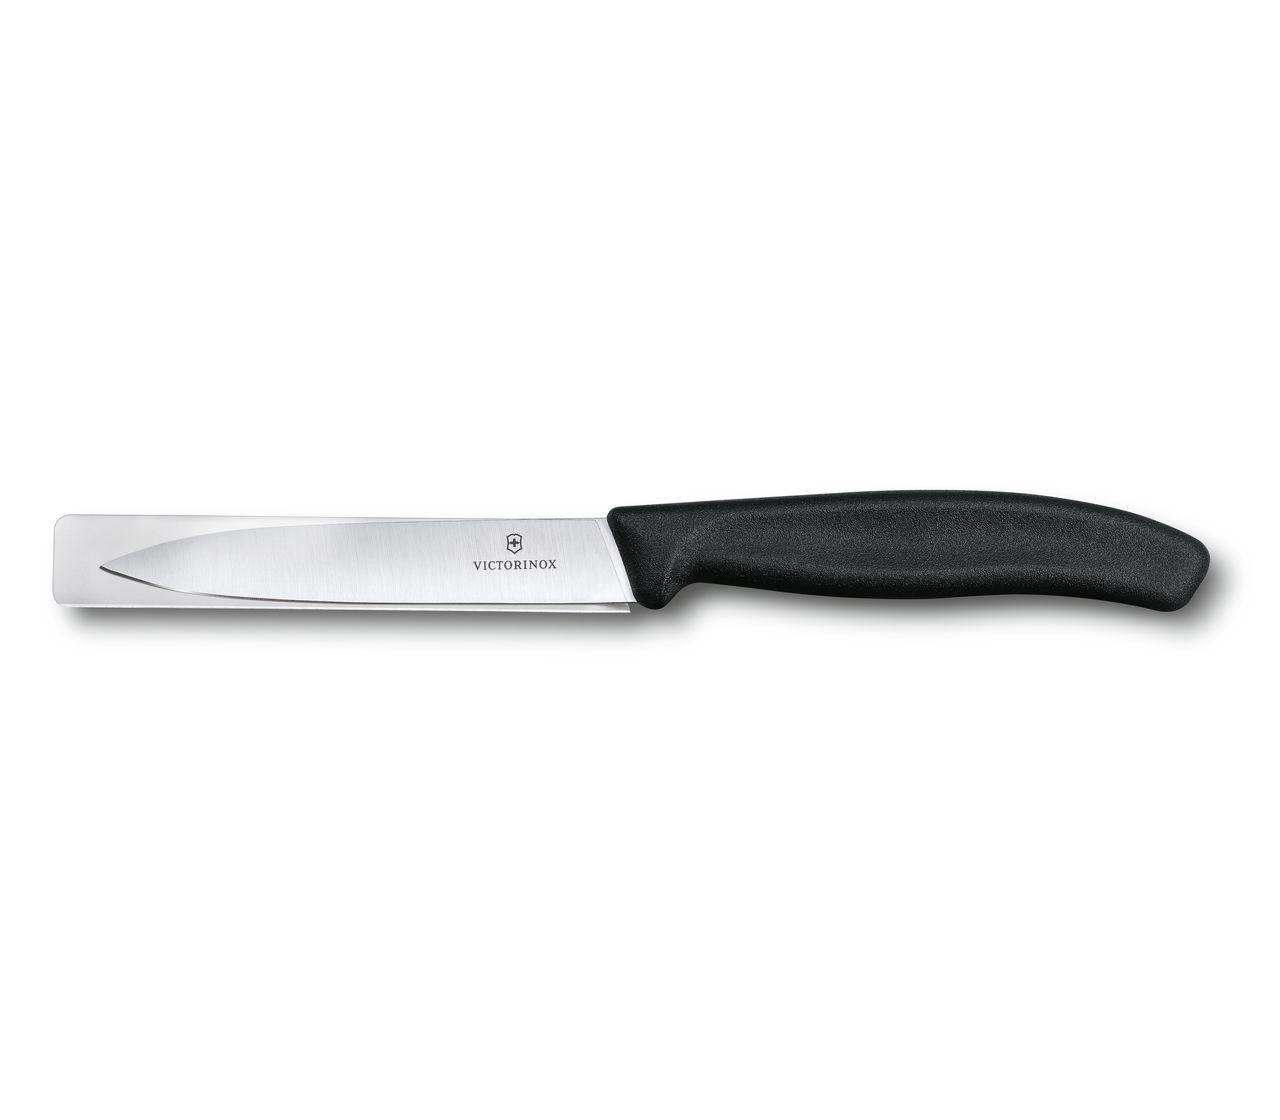 Victorinox Swiss Classic Paring Knife in black - 6.7703